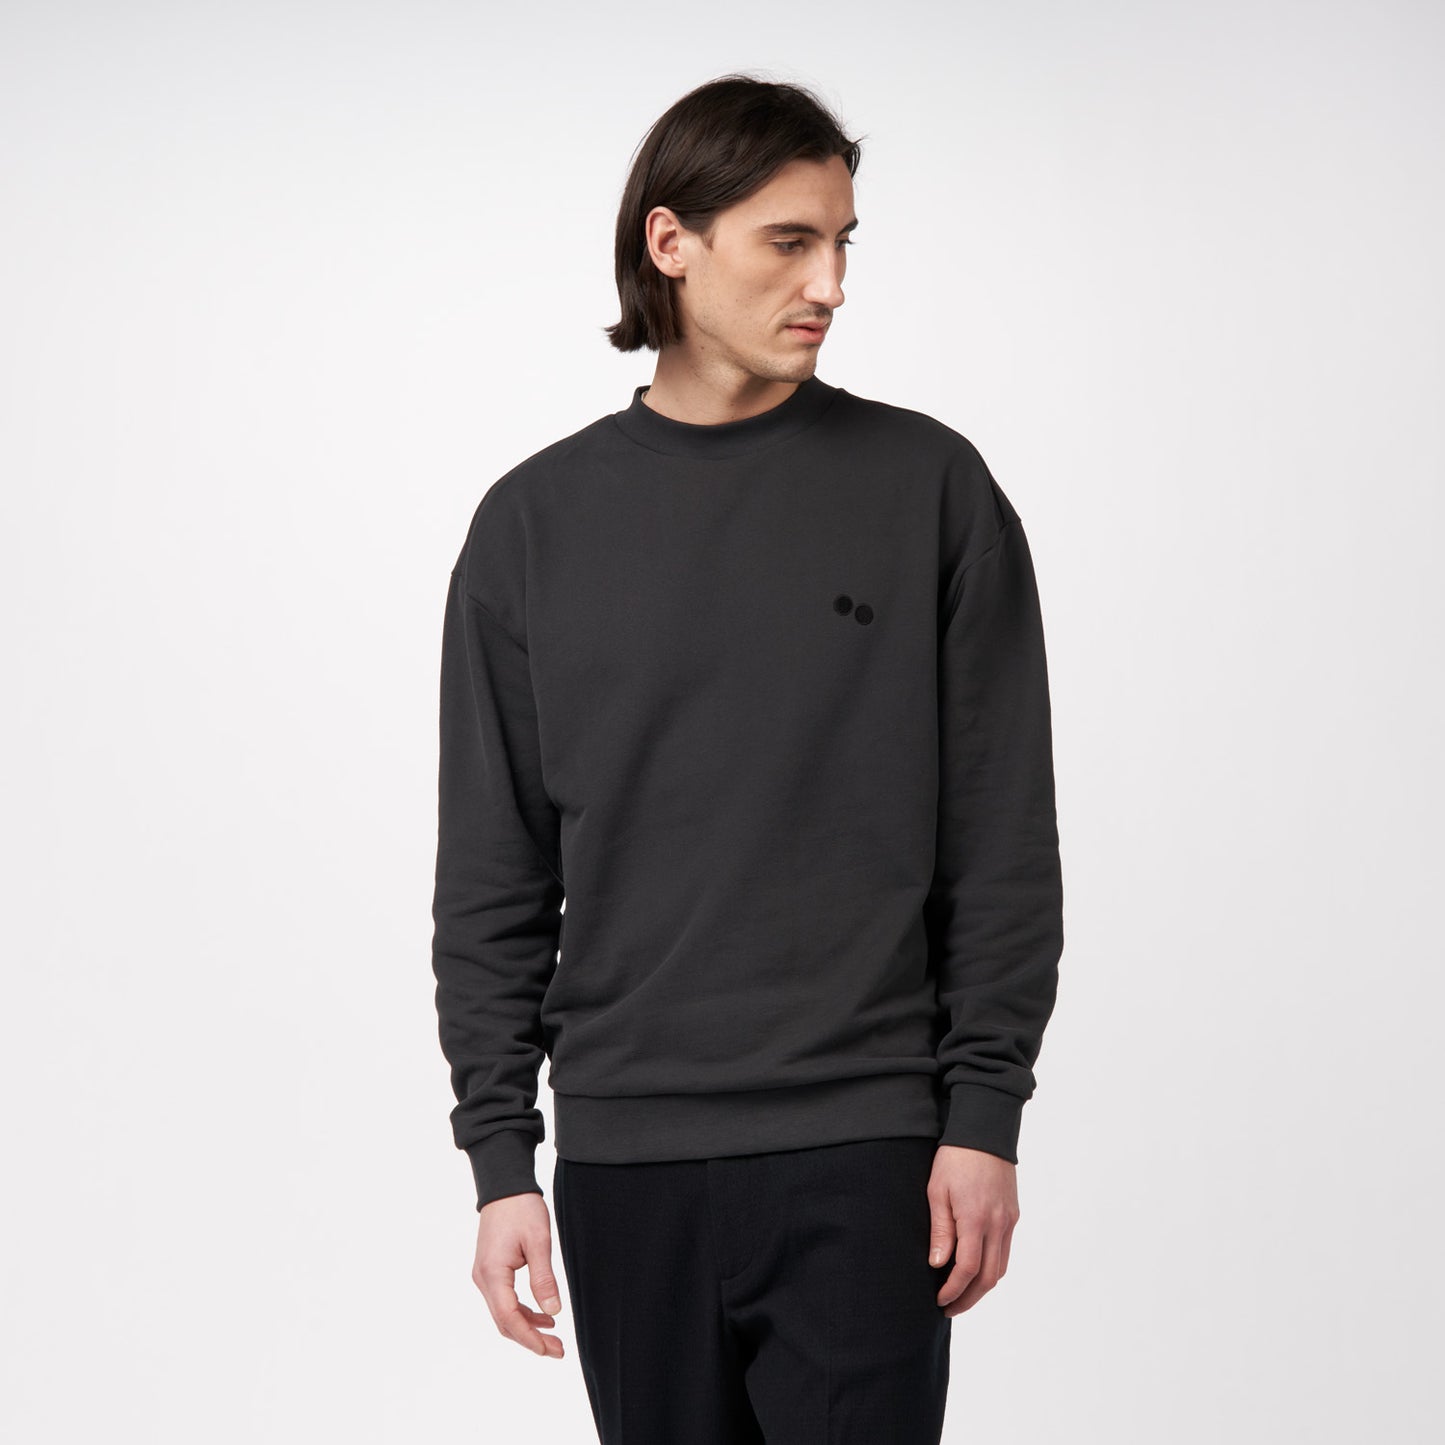 pinqponq-Sweatshirt-Peat-Black-front